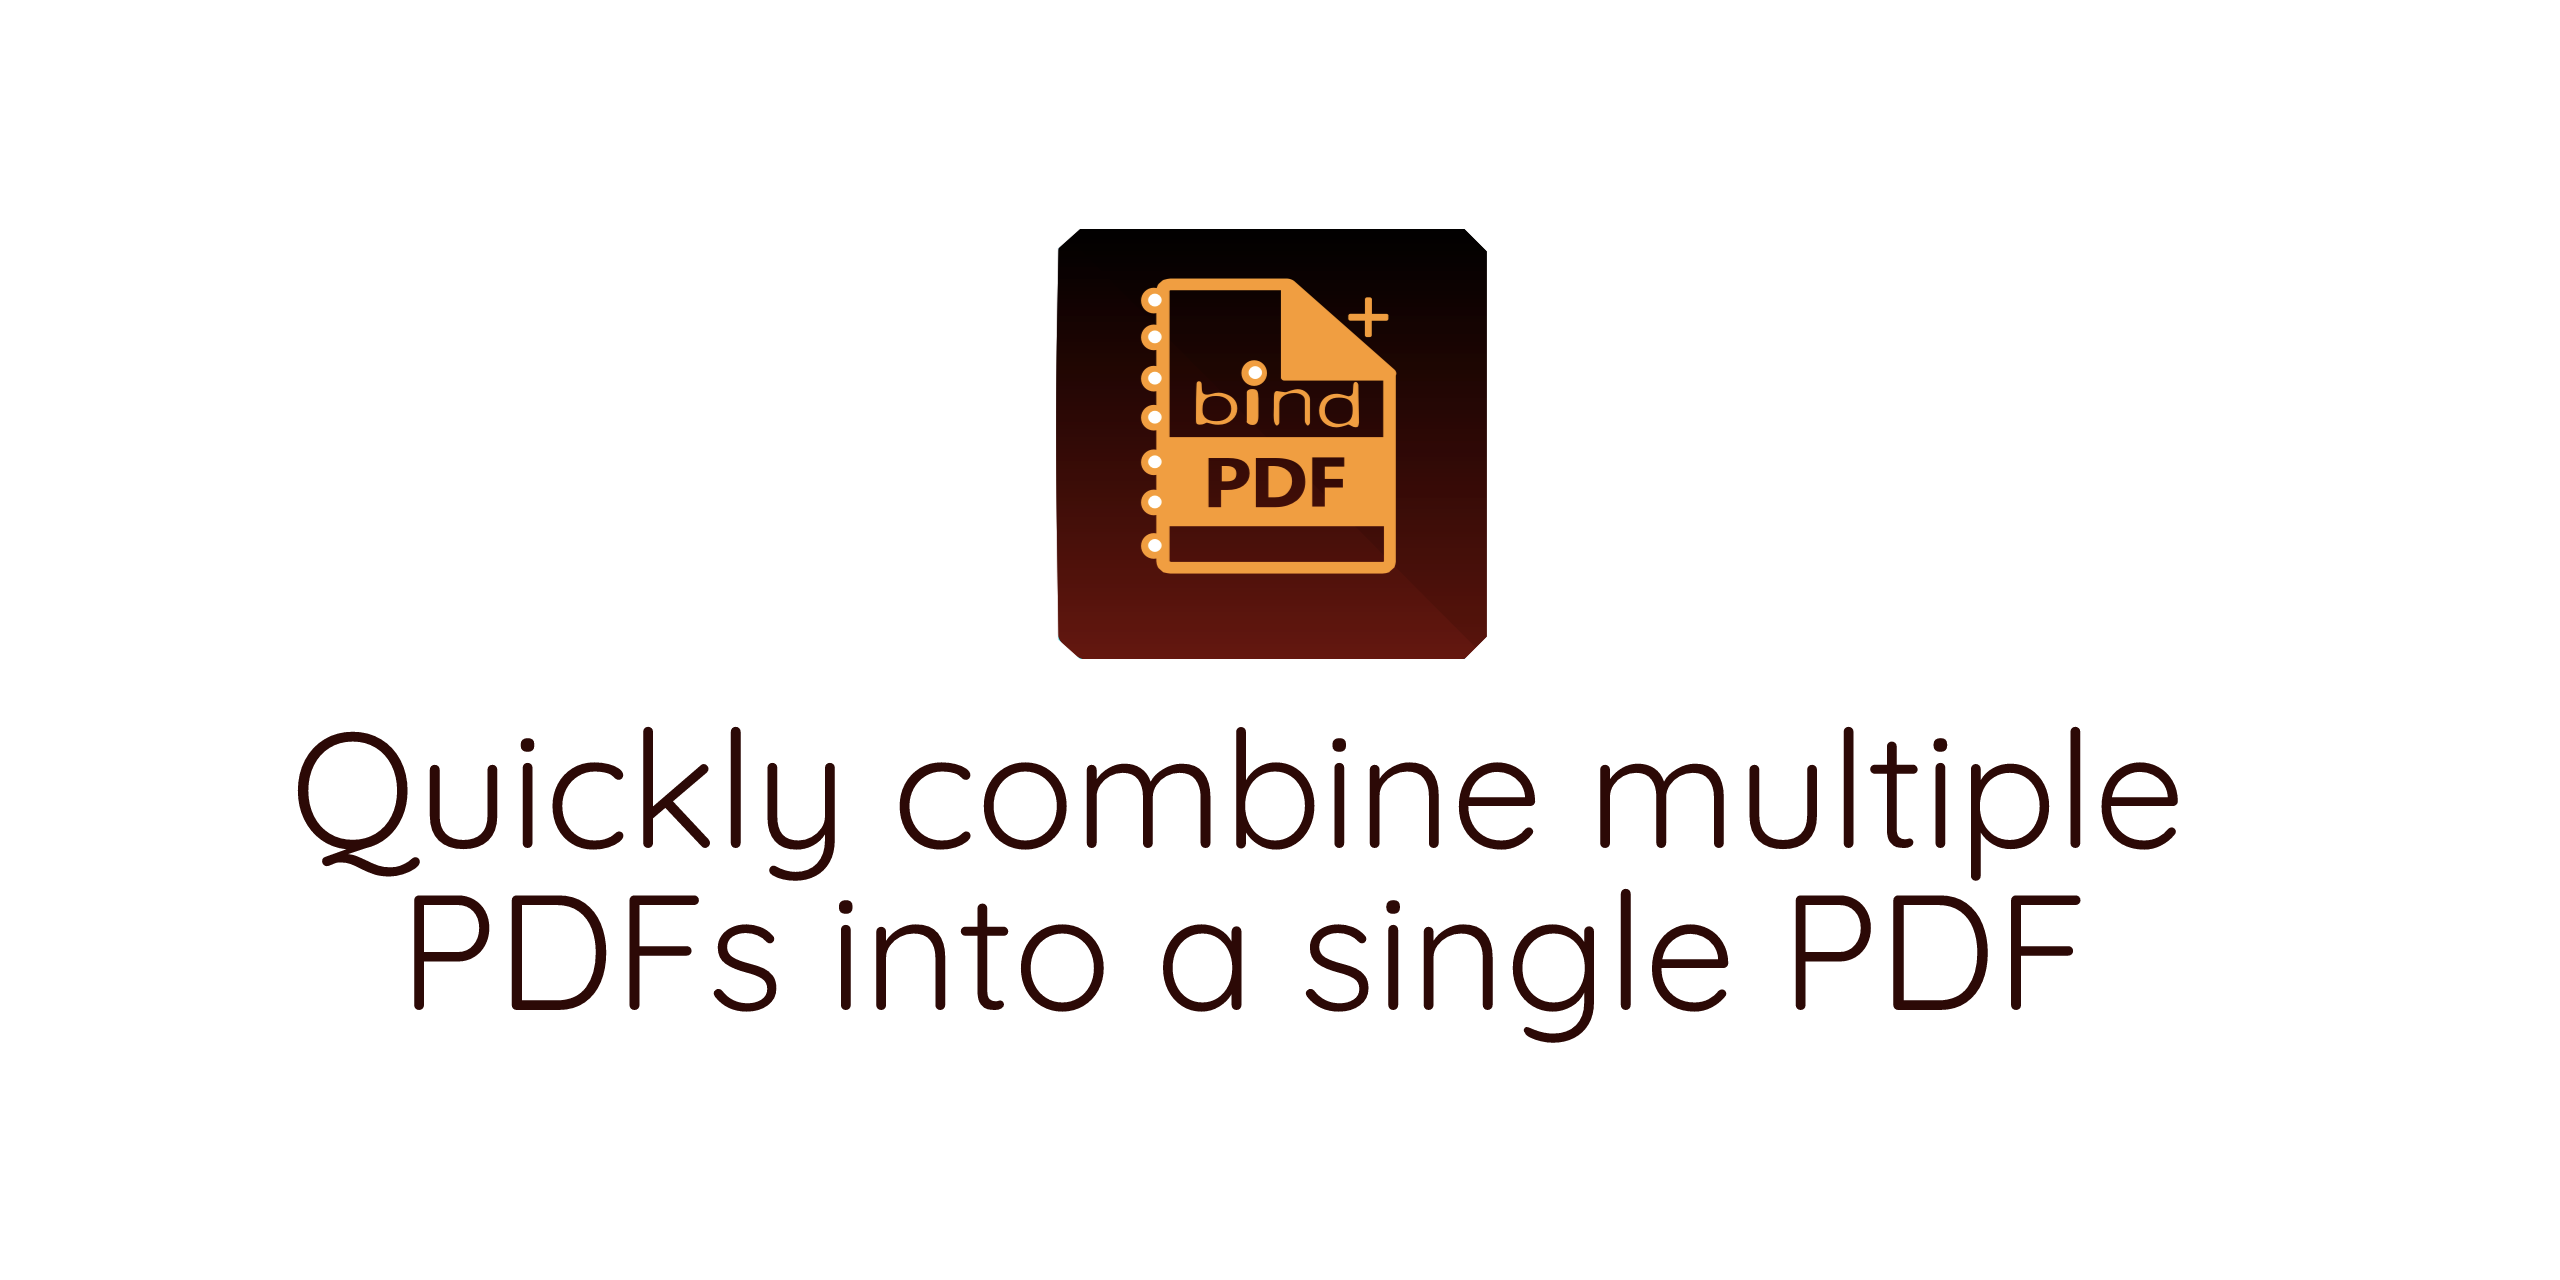 bindPDFA friendly UI to combine multiple PDFs into a single PDF